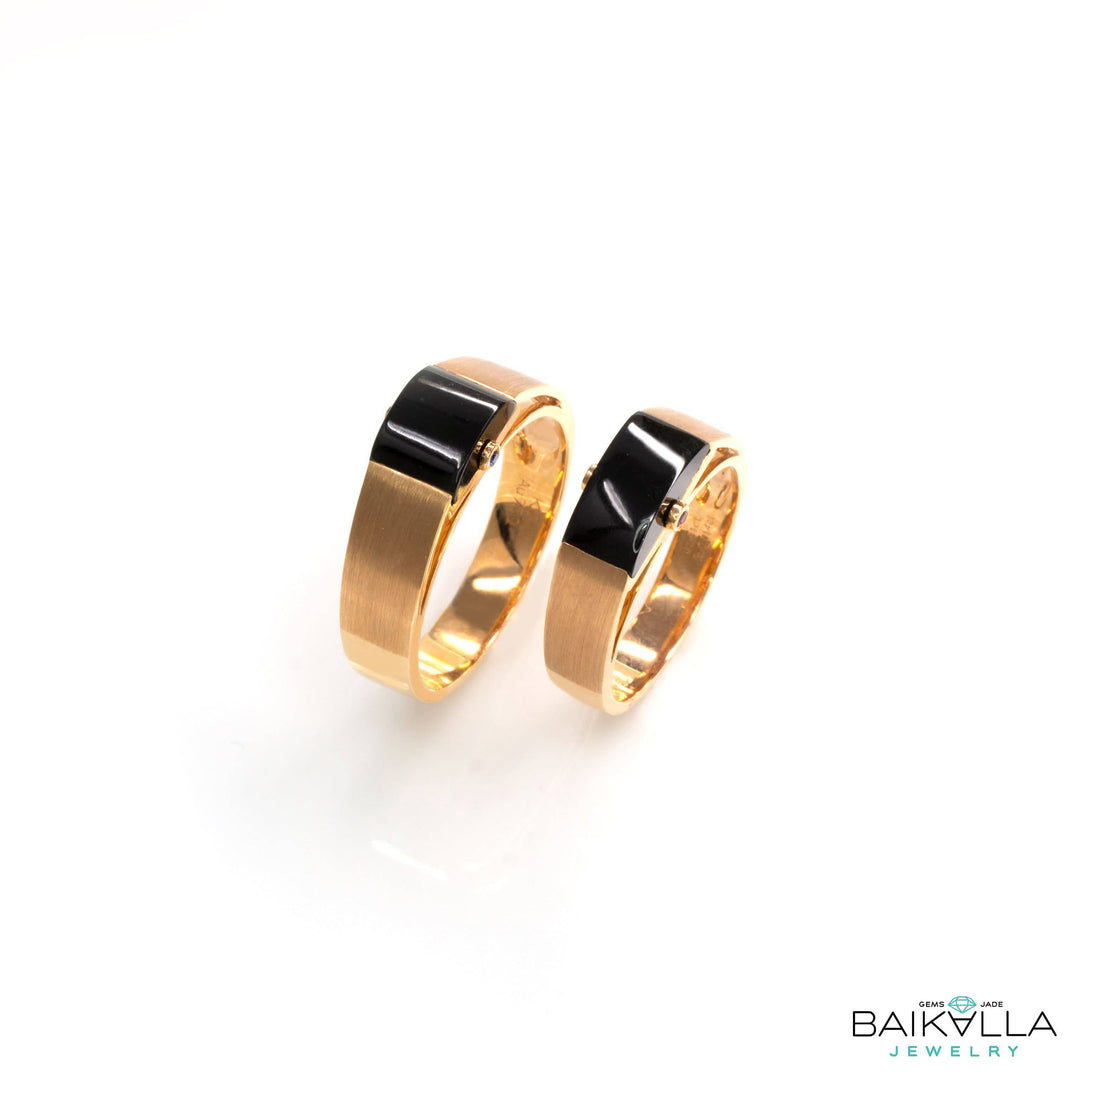 Baikalla Jewelry Gold Jadeite Jade Ring One Pair Baikalla™ "Classic Half Round Cabochon" Genuine Burmese Emerald Cut Black Jadeite Jade Engagement Ring